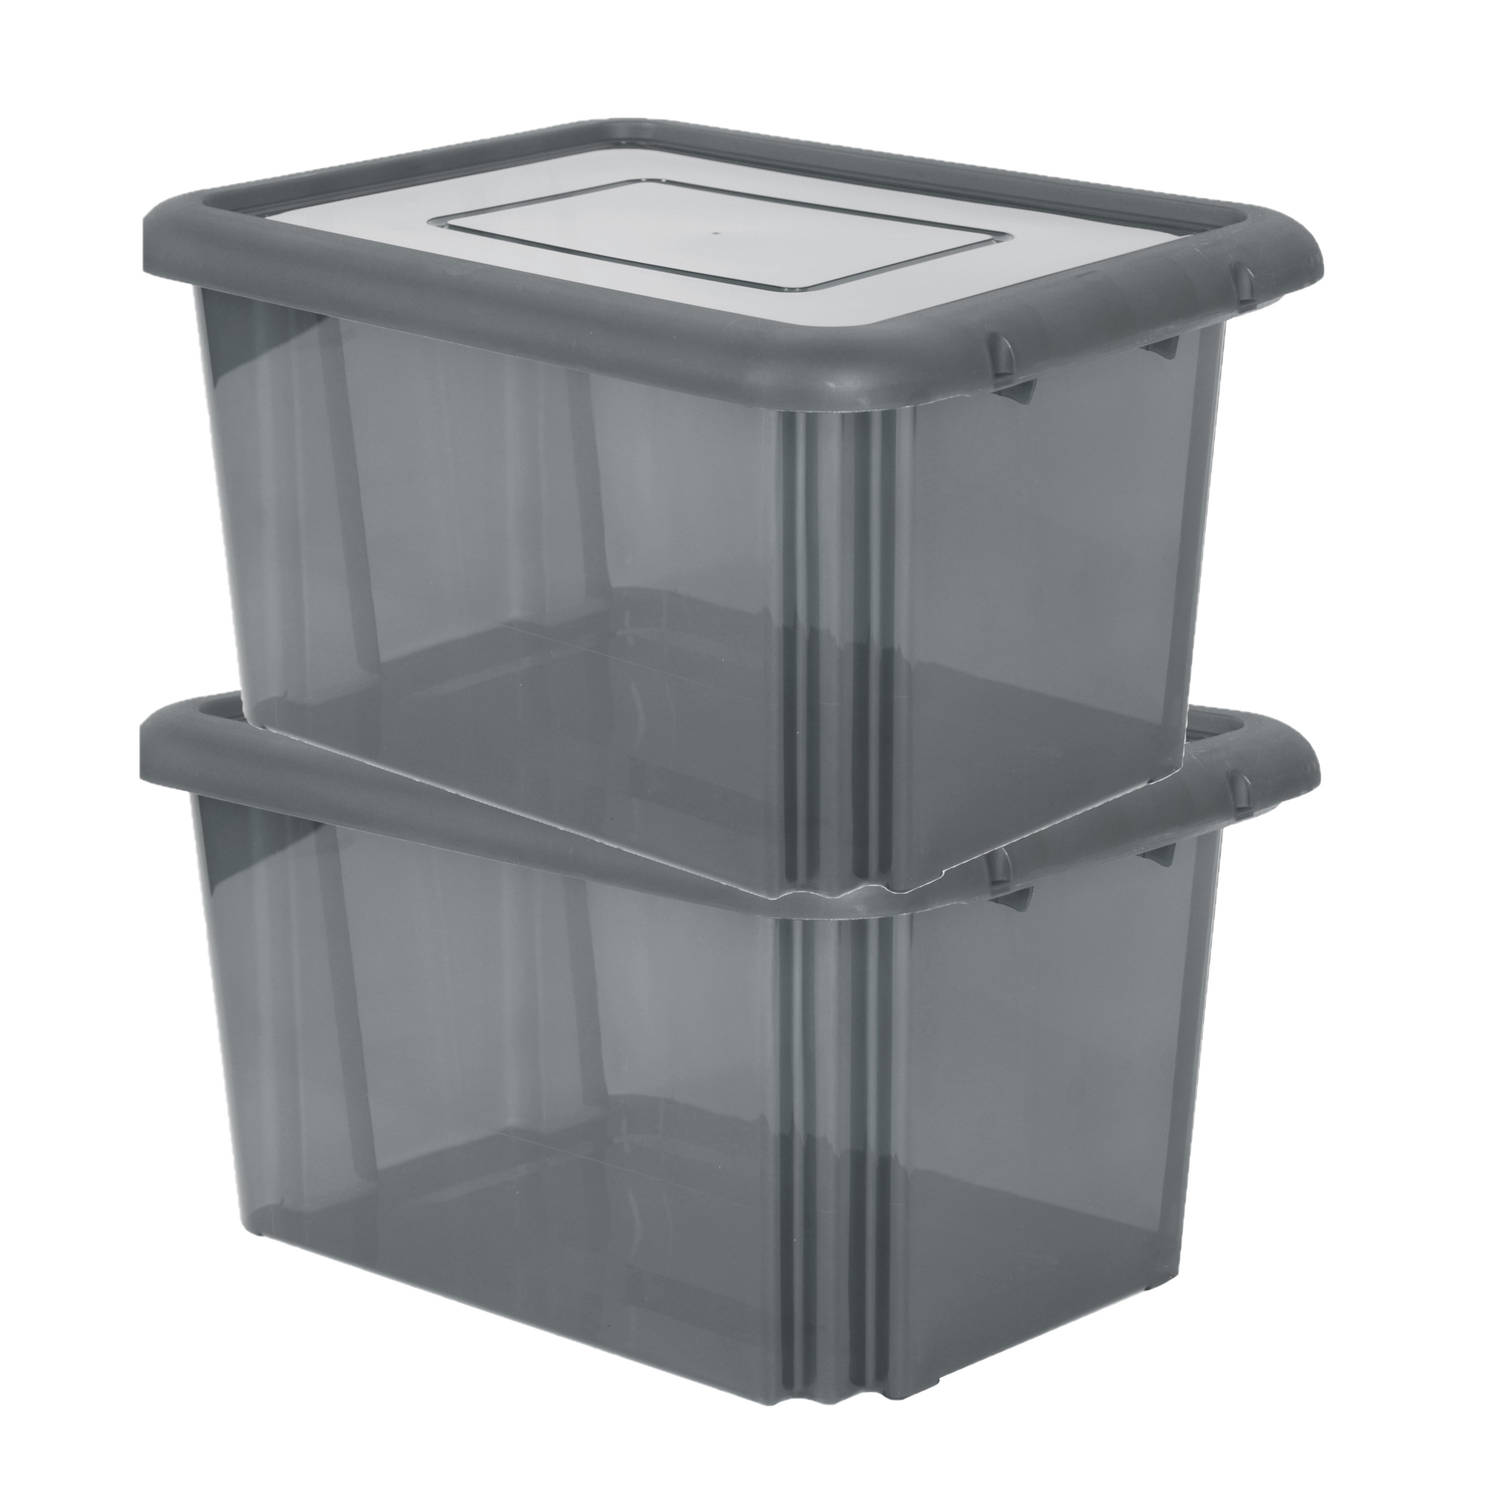 2x stuks kunststof opbergboxen/opbergdozen grijs transparant L58 x B44 x H31 cm - Opbergbox